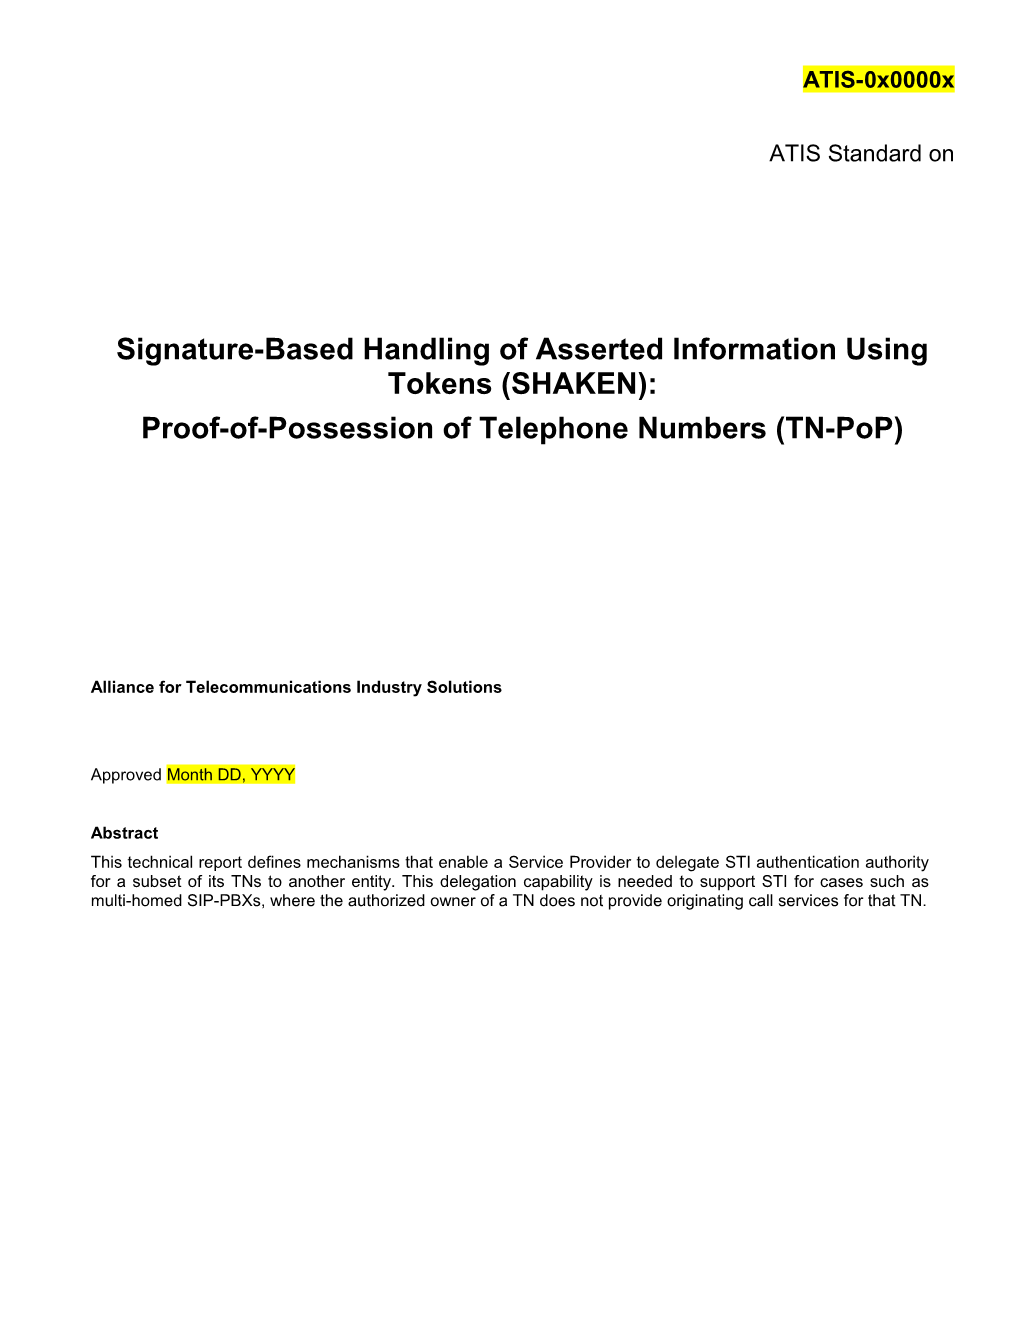 Signature-Based Handling of Asserted Information Using Tokens (SHAKEN)